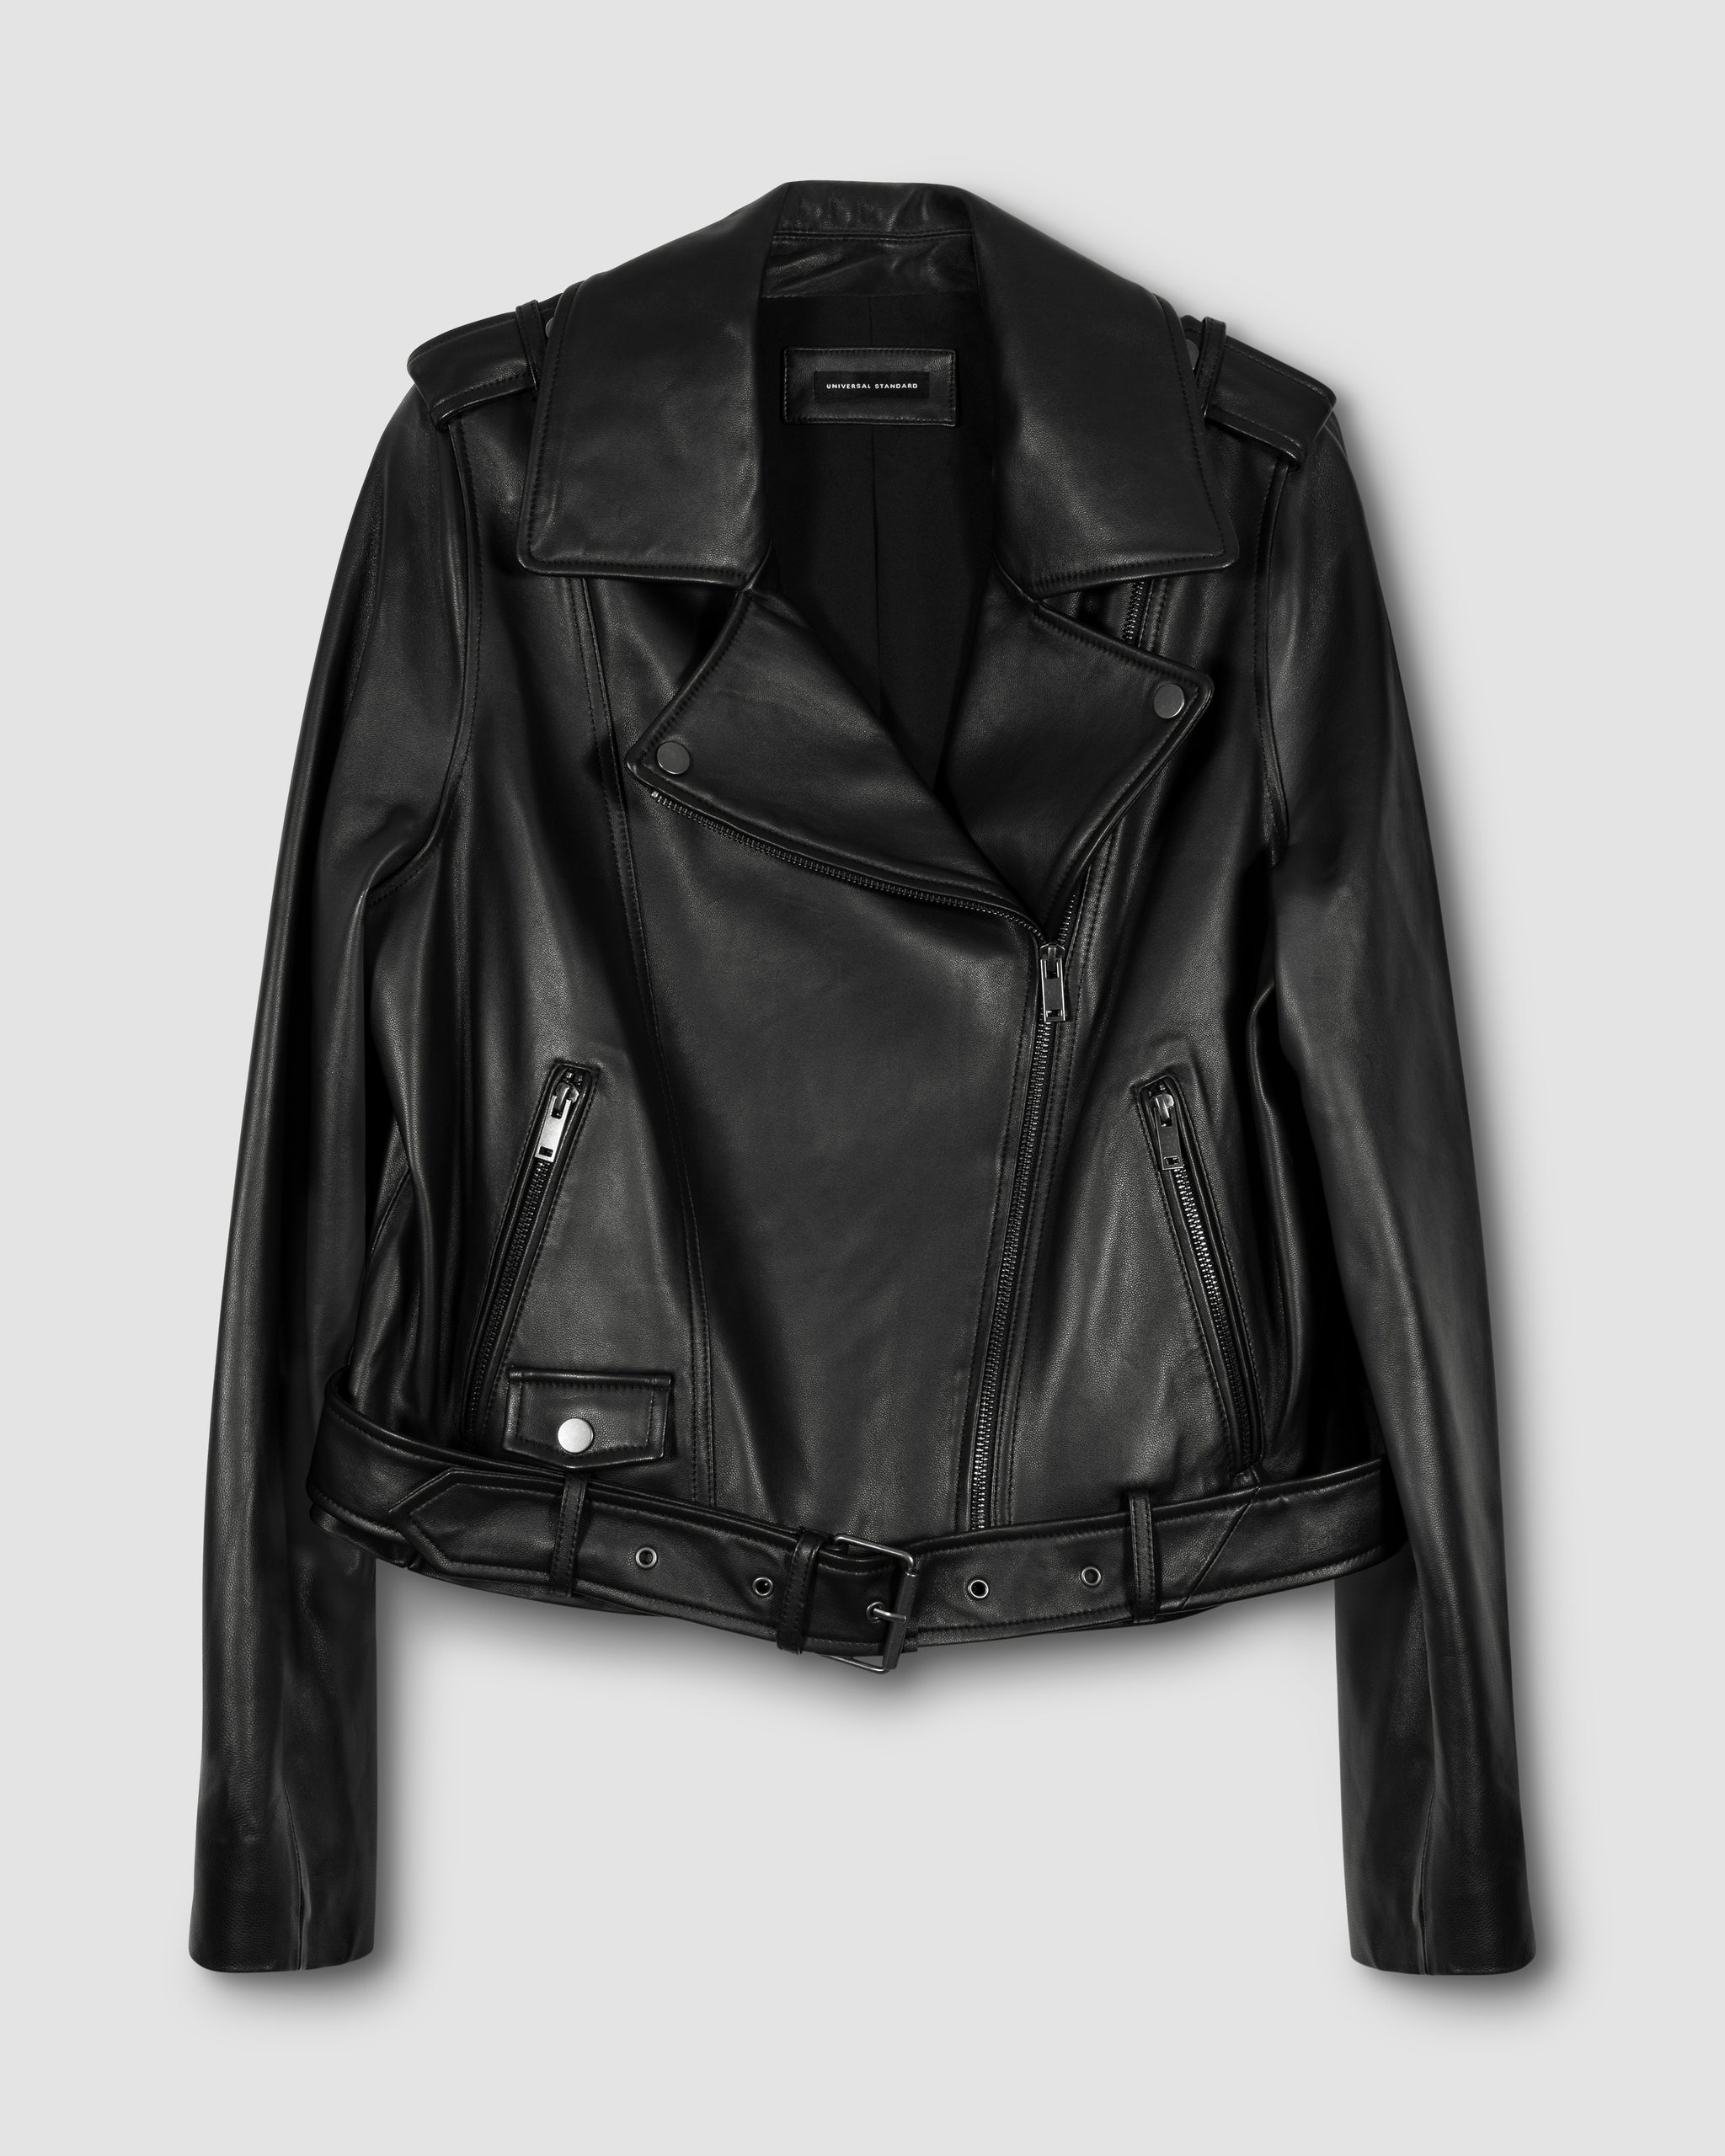 Plus Size Belted Faux Leather Jacket Edgy Vegan Leather Jacket